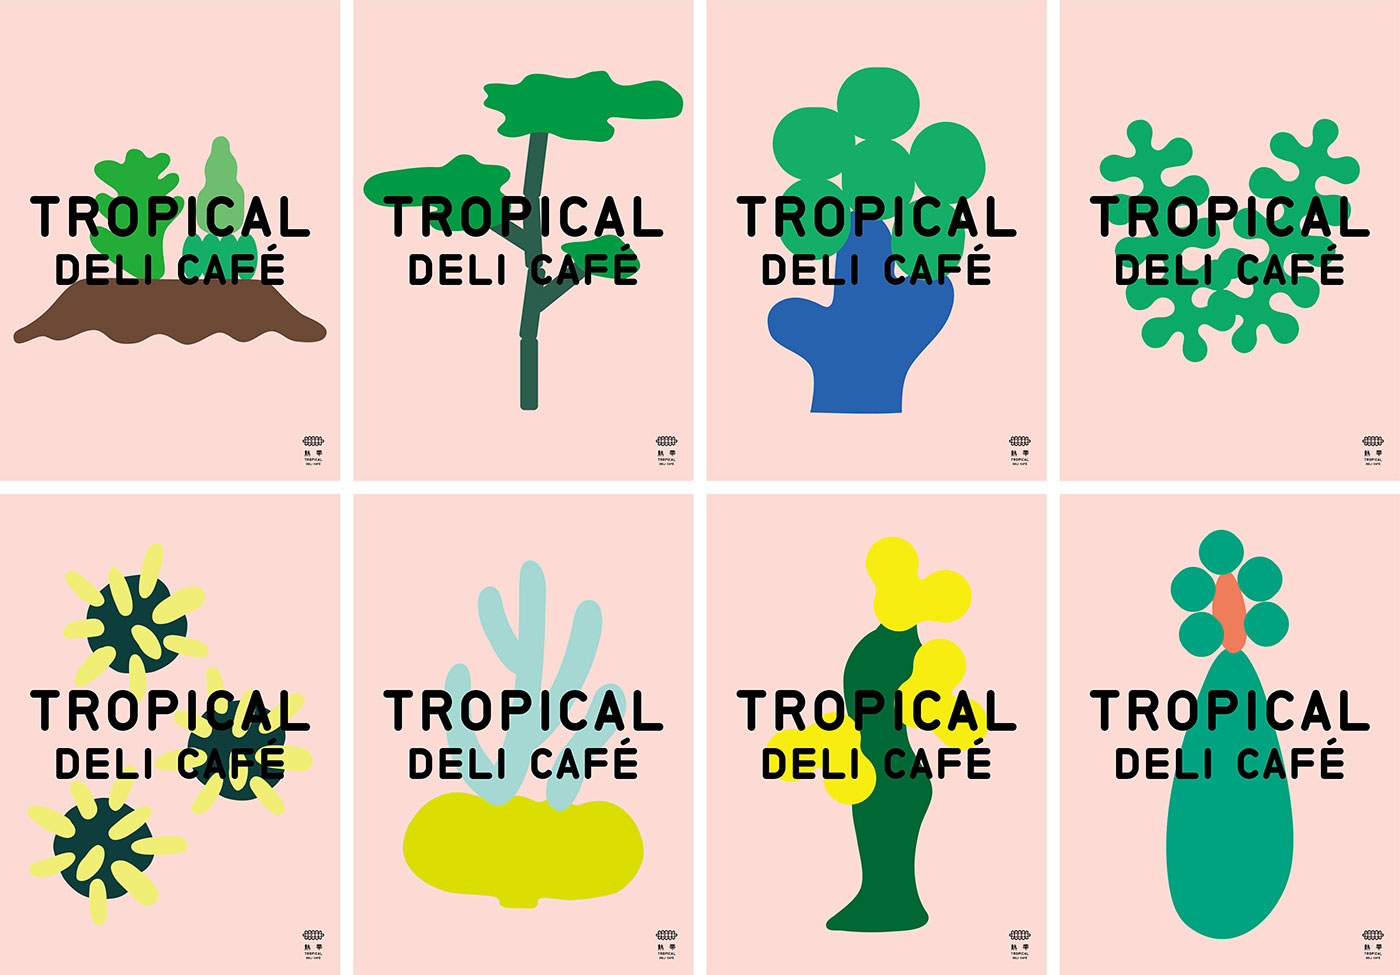 Tropical Deli Café 咖啡品牌设计